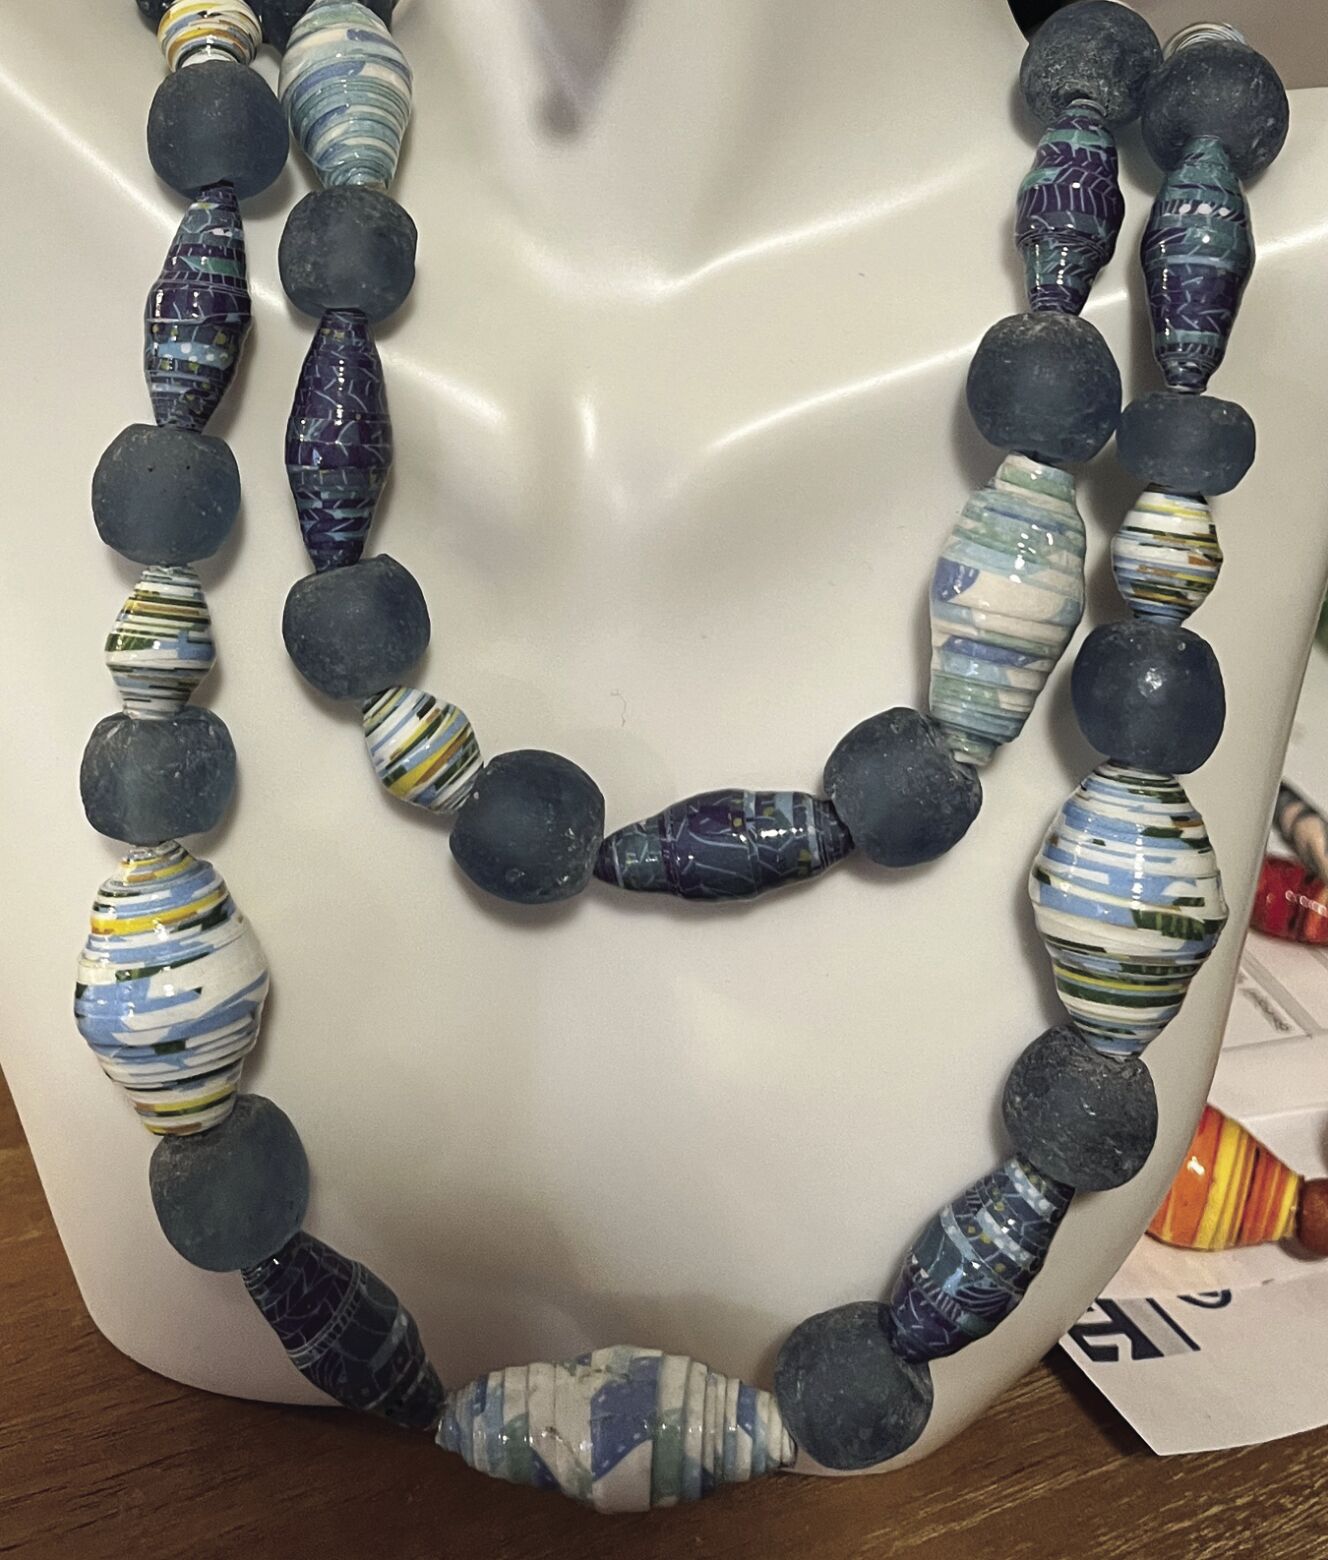 Paper bead jewelry. By Brenda Villalobos | Paper bead jewelry, Paper jewelry,  Paper beads necklace